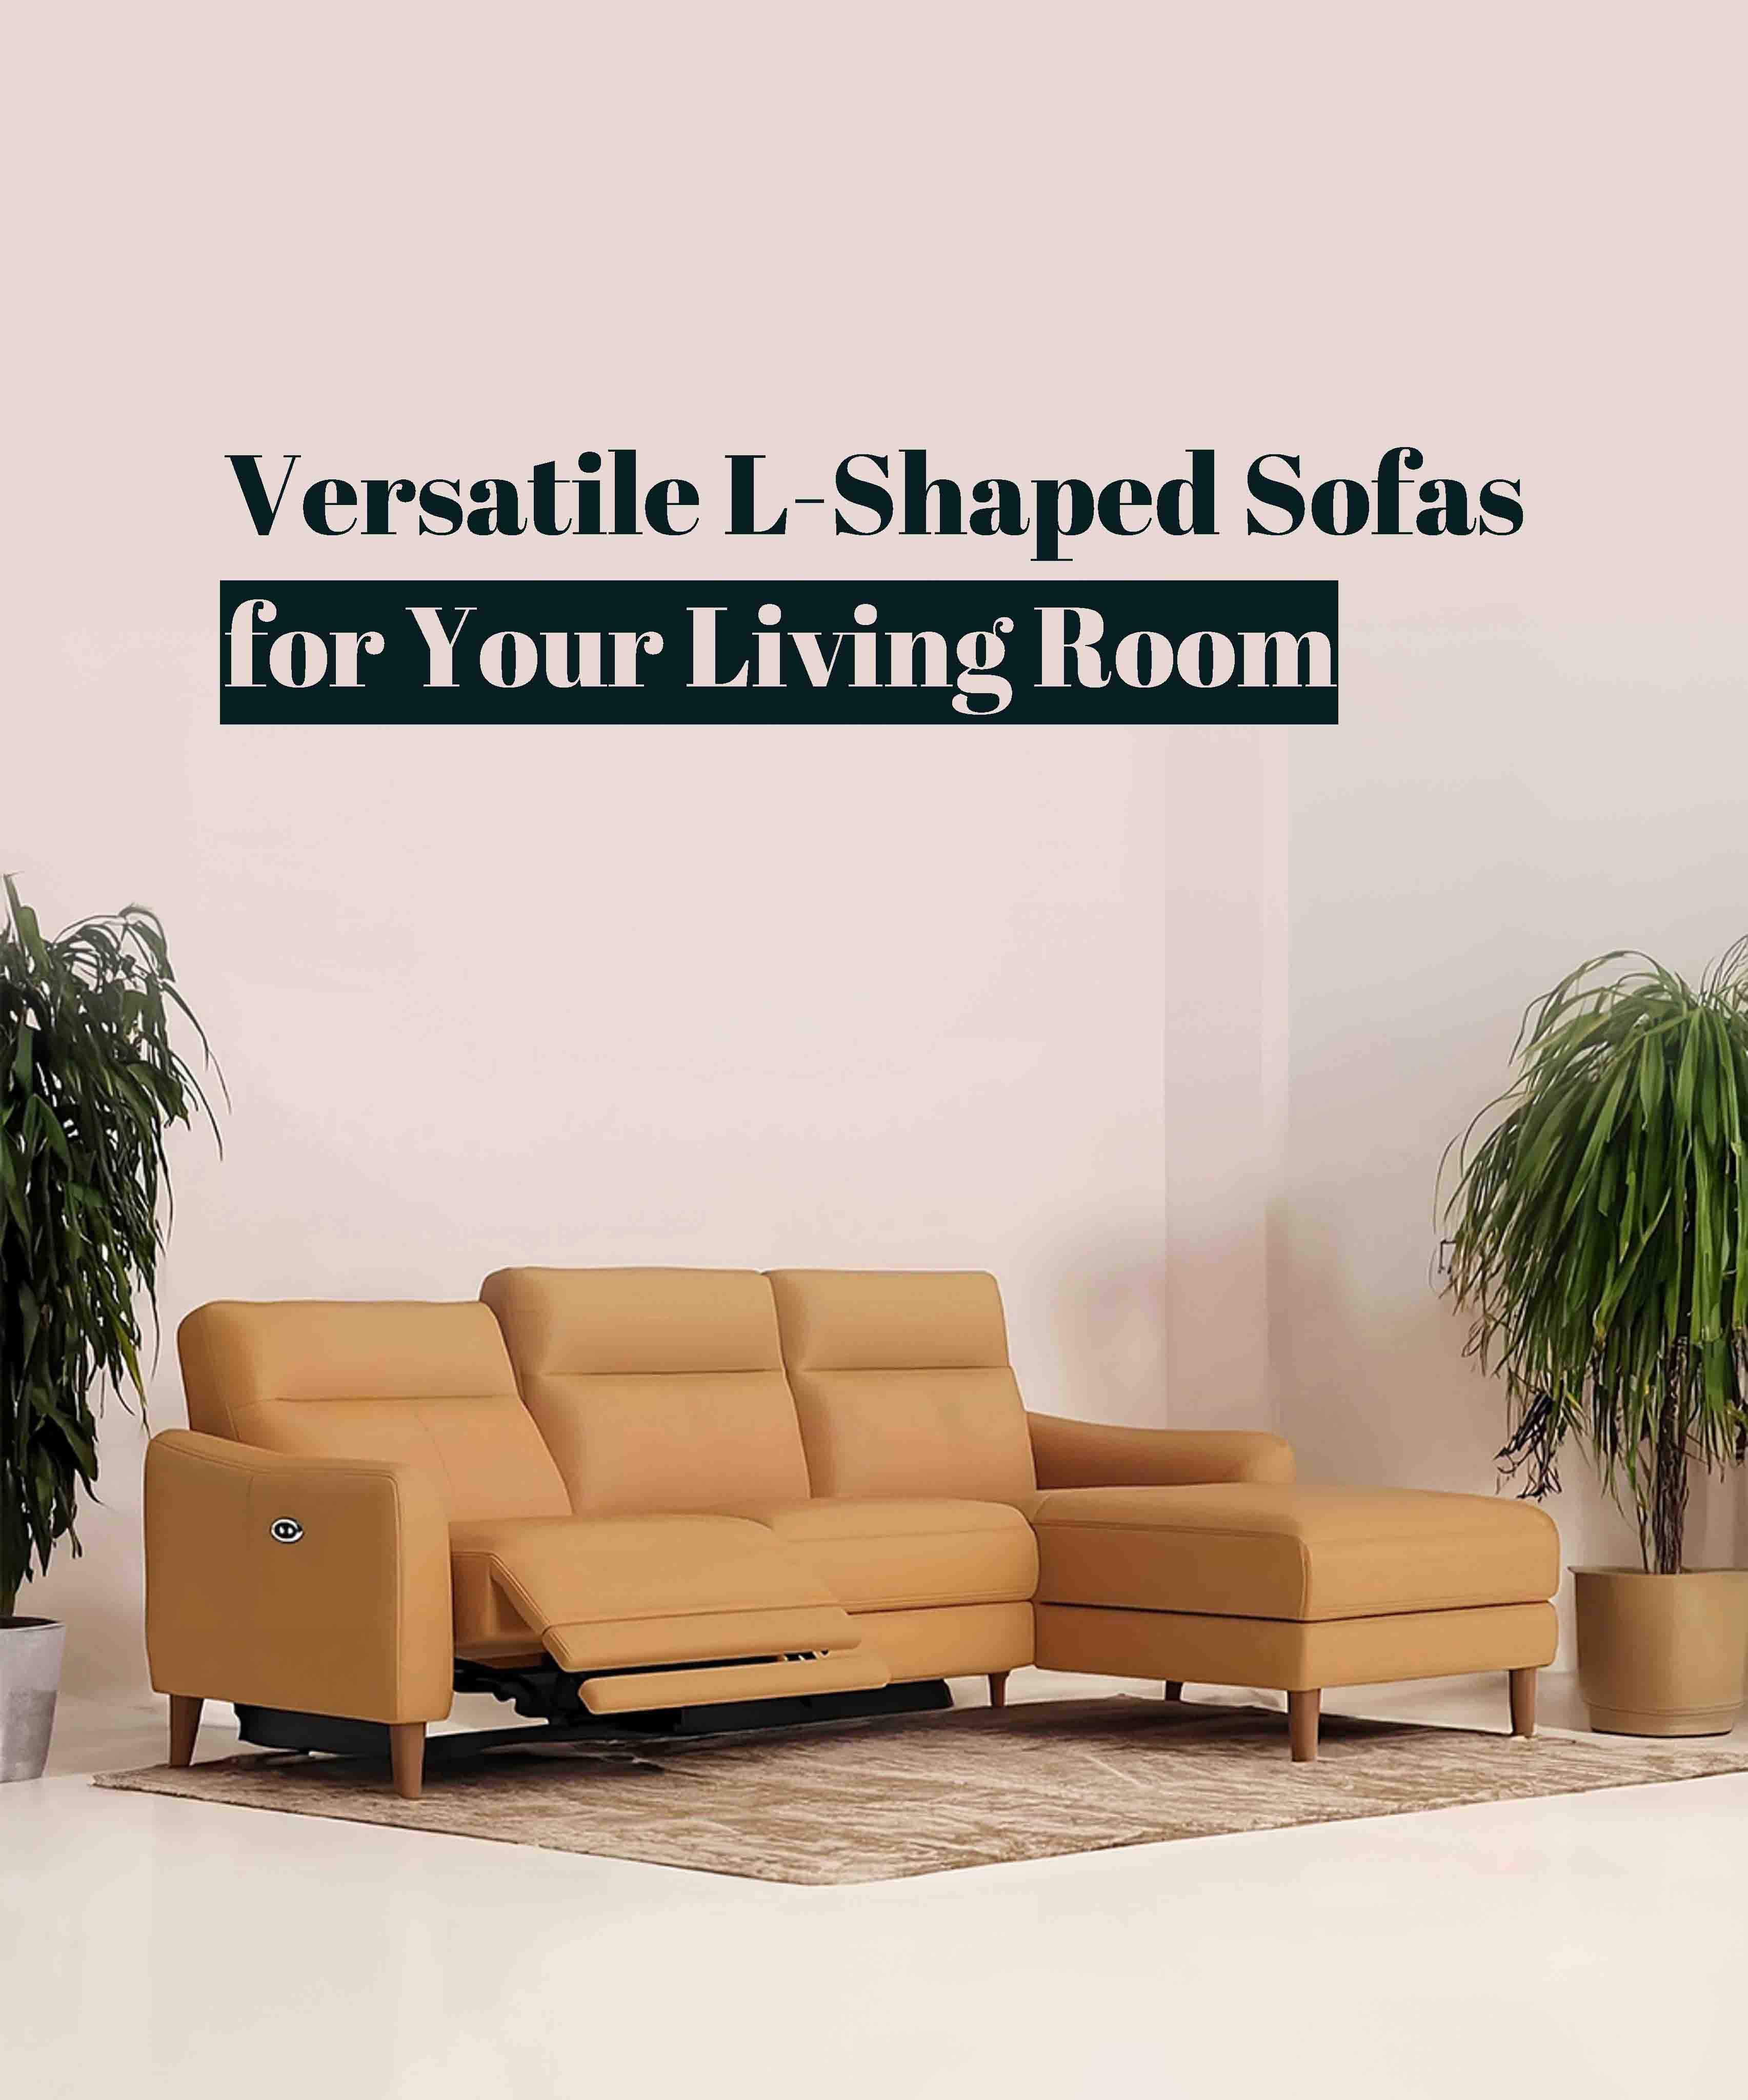 L-shaped sofas, L-shaped recliner sofas